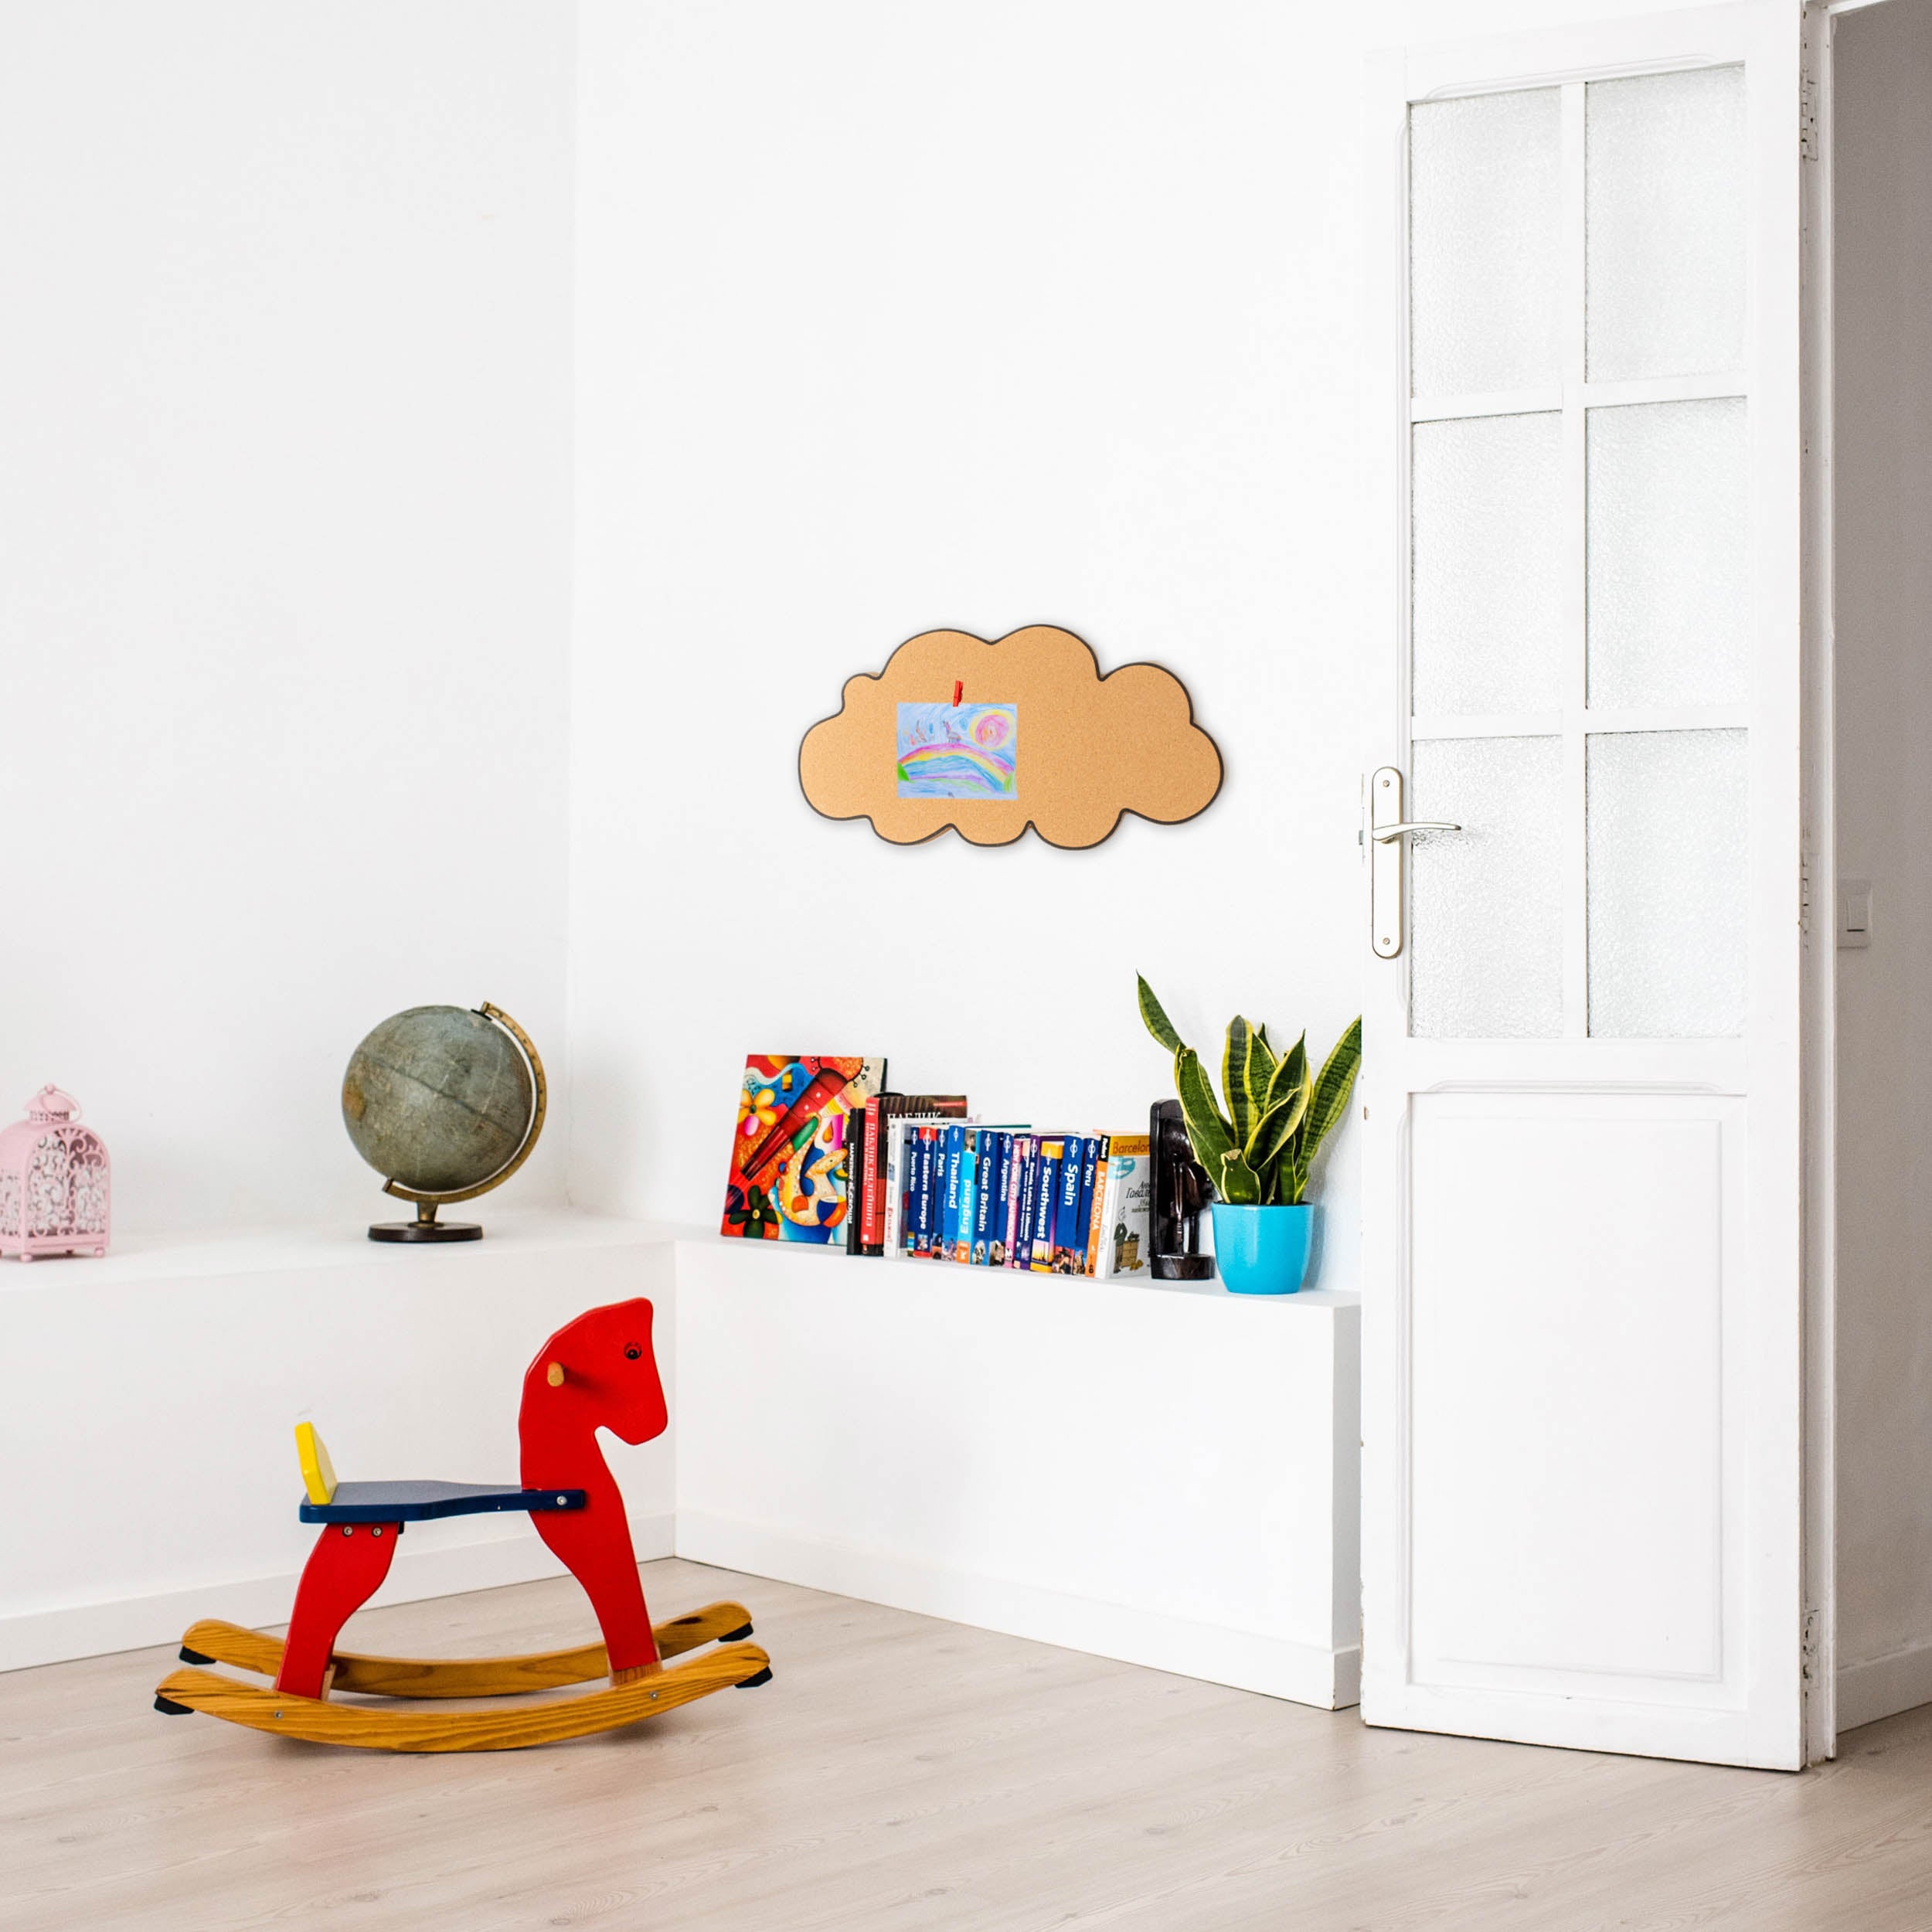 Decorative Cloud Cork Boards for Walls